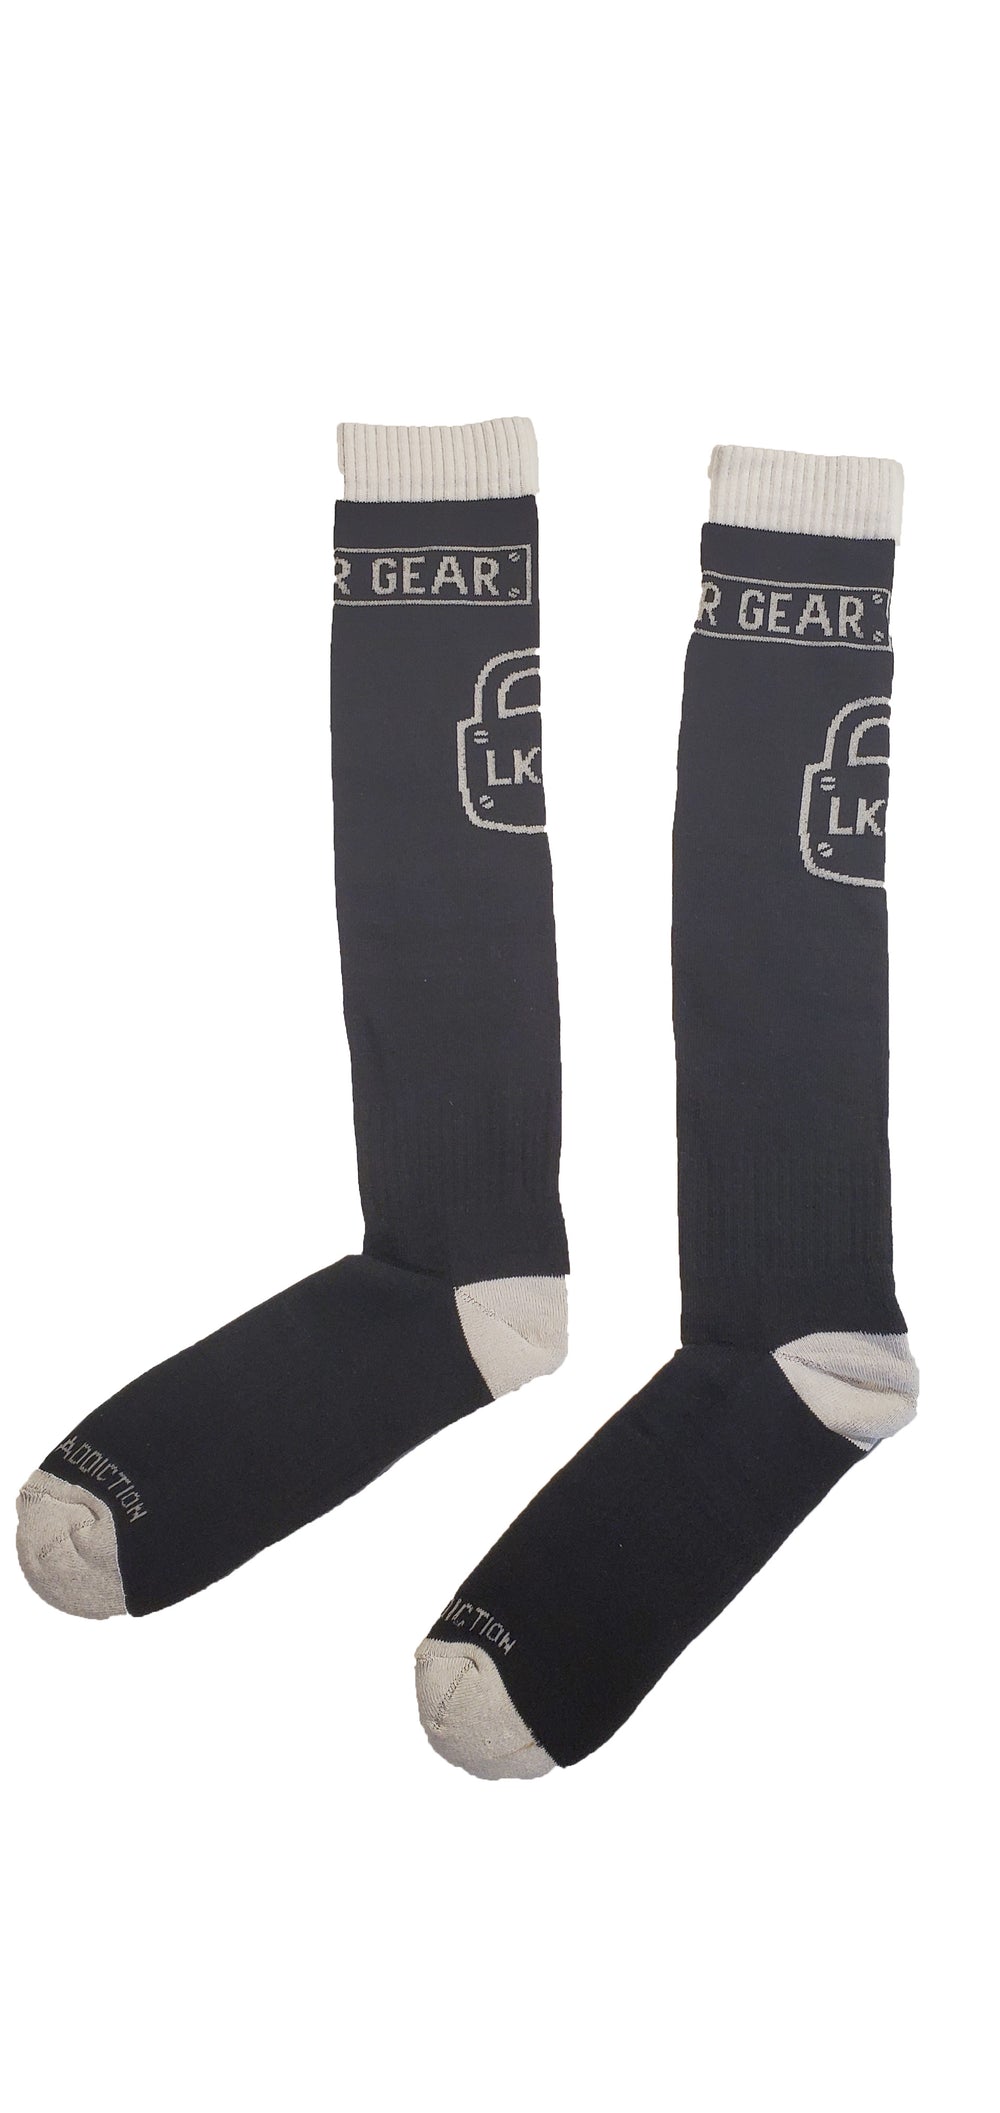 Locker Gear Knee High Socks